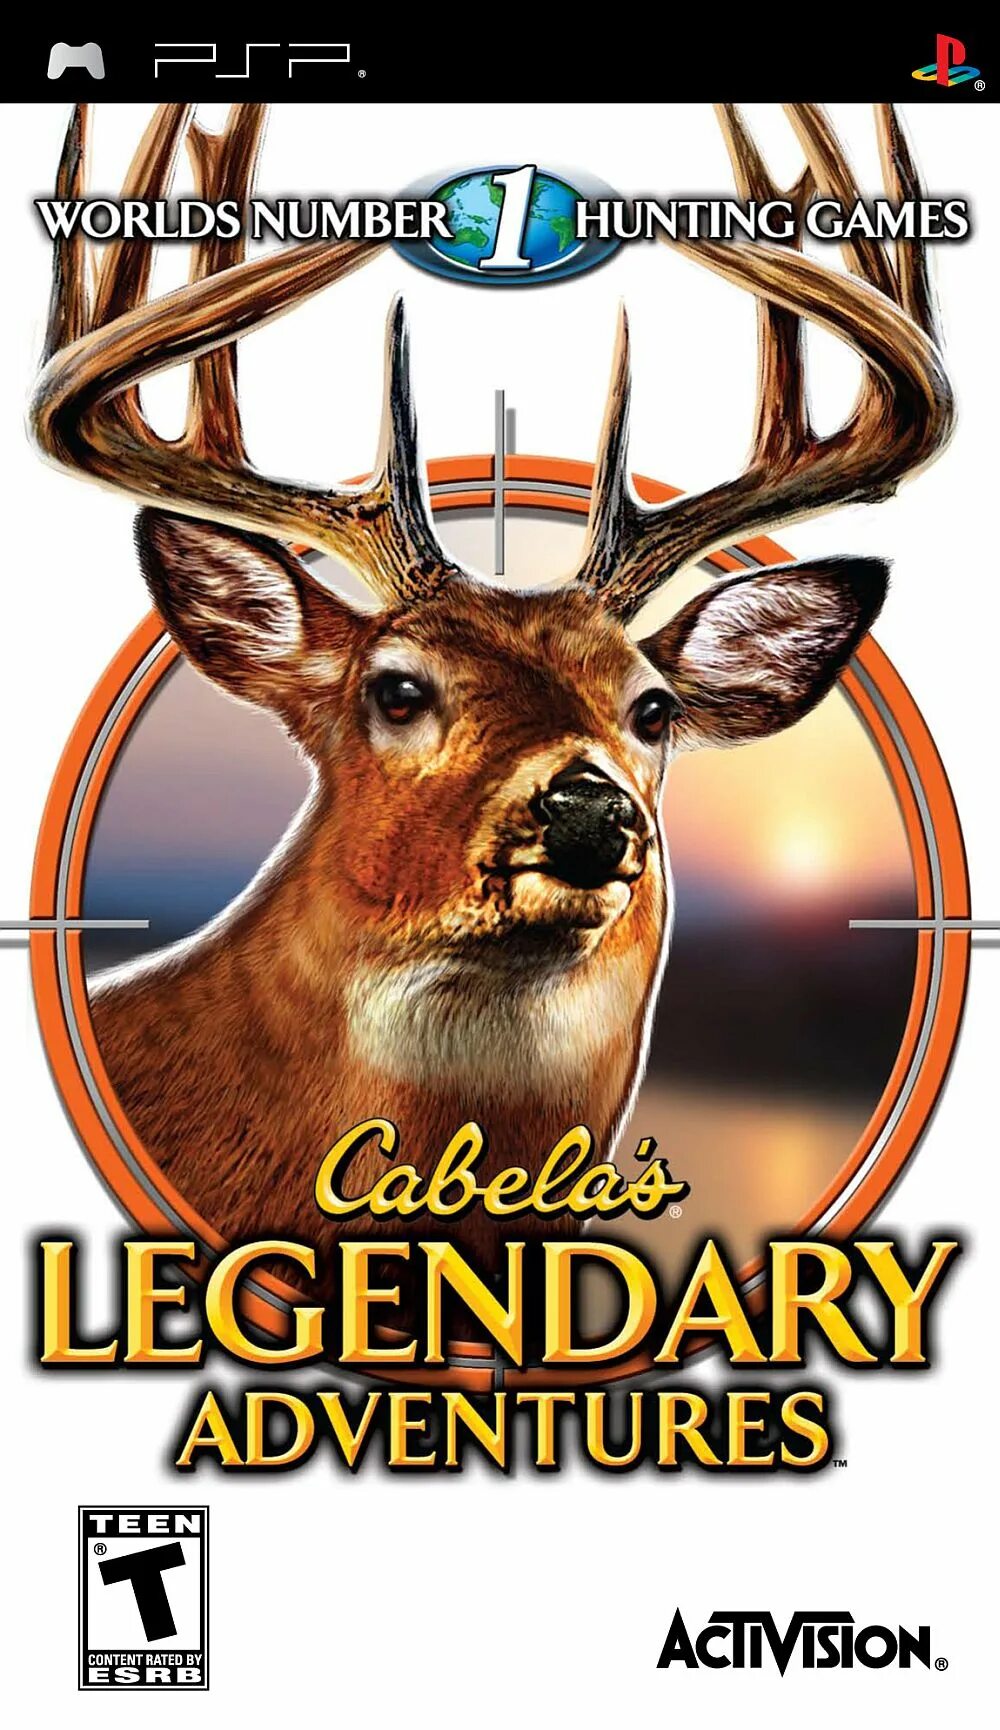 Cabela s adventures. Cabela's Legendary Adventures. Cabela's PSP. PLAYSTATION Portable Cabela's Legendary Adventures. Legendary 2008.